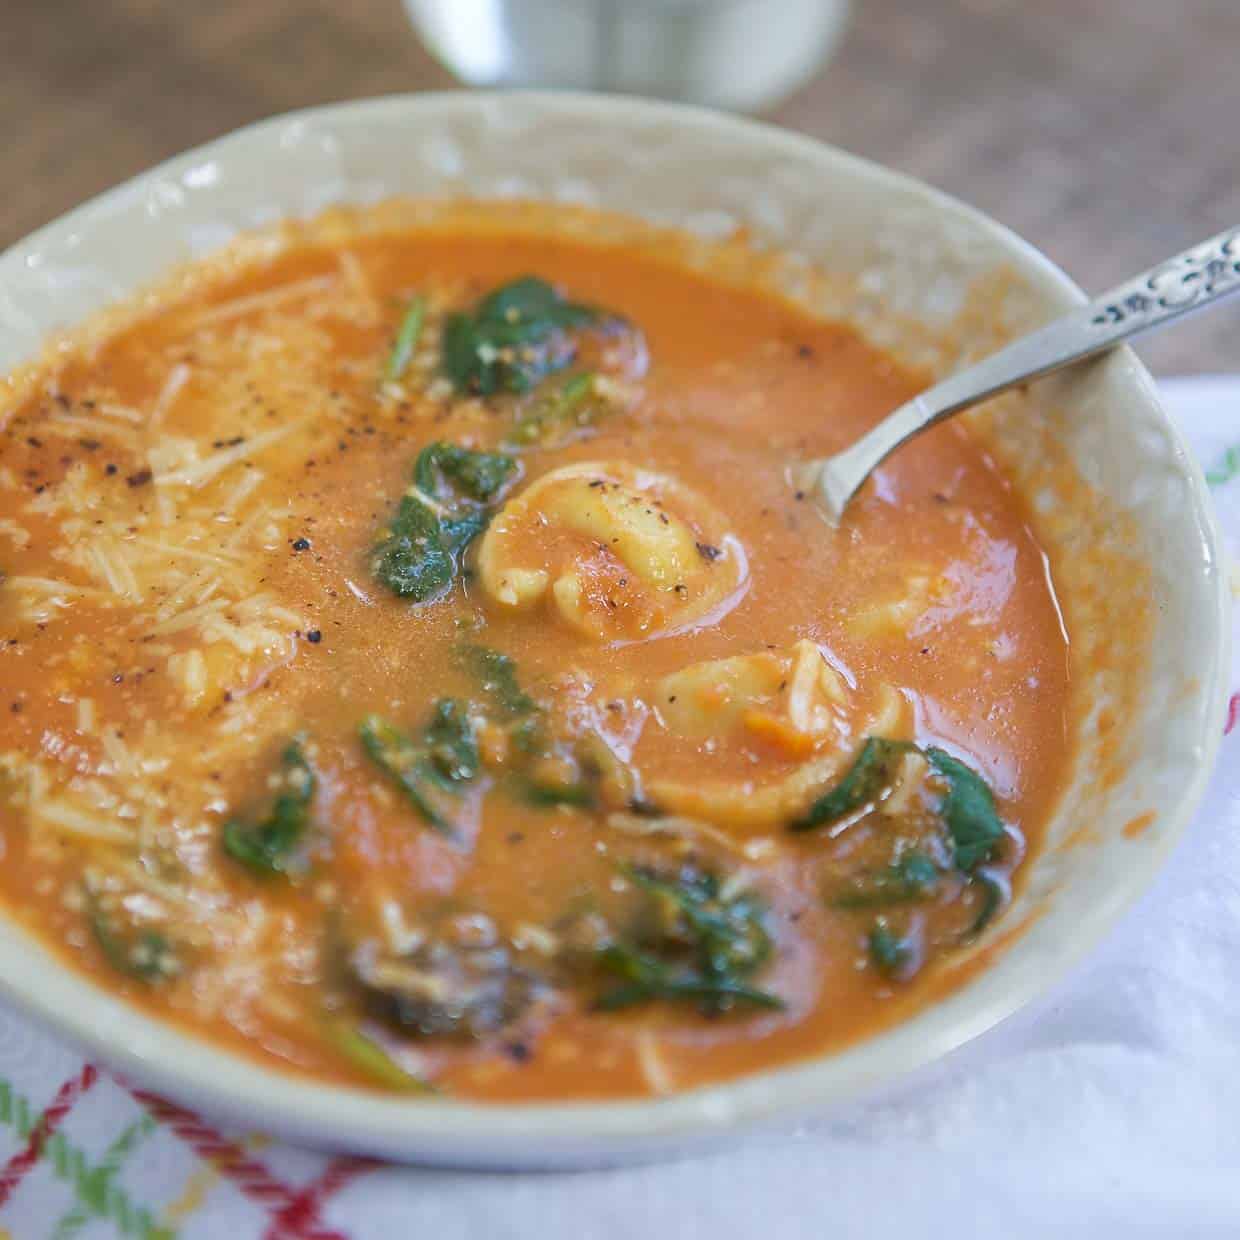 https://aggieskitchen.com/wp-content/uploads/2018/11/Tomato-Spinach-Tortellini-Soup-Skinnytaste-4.jpg